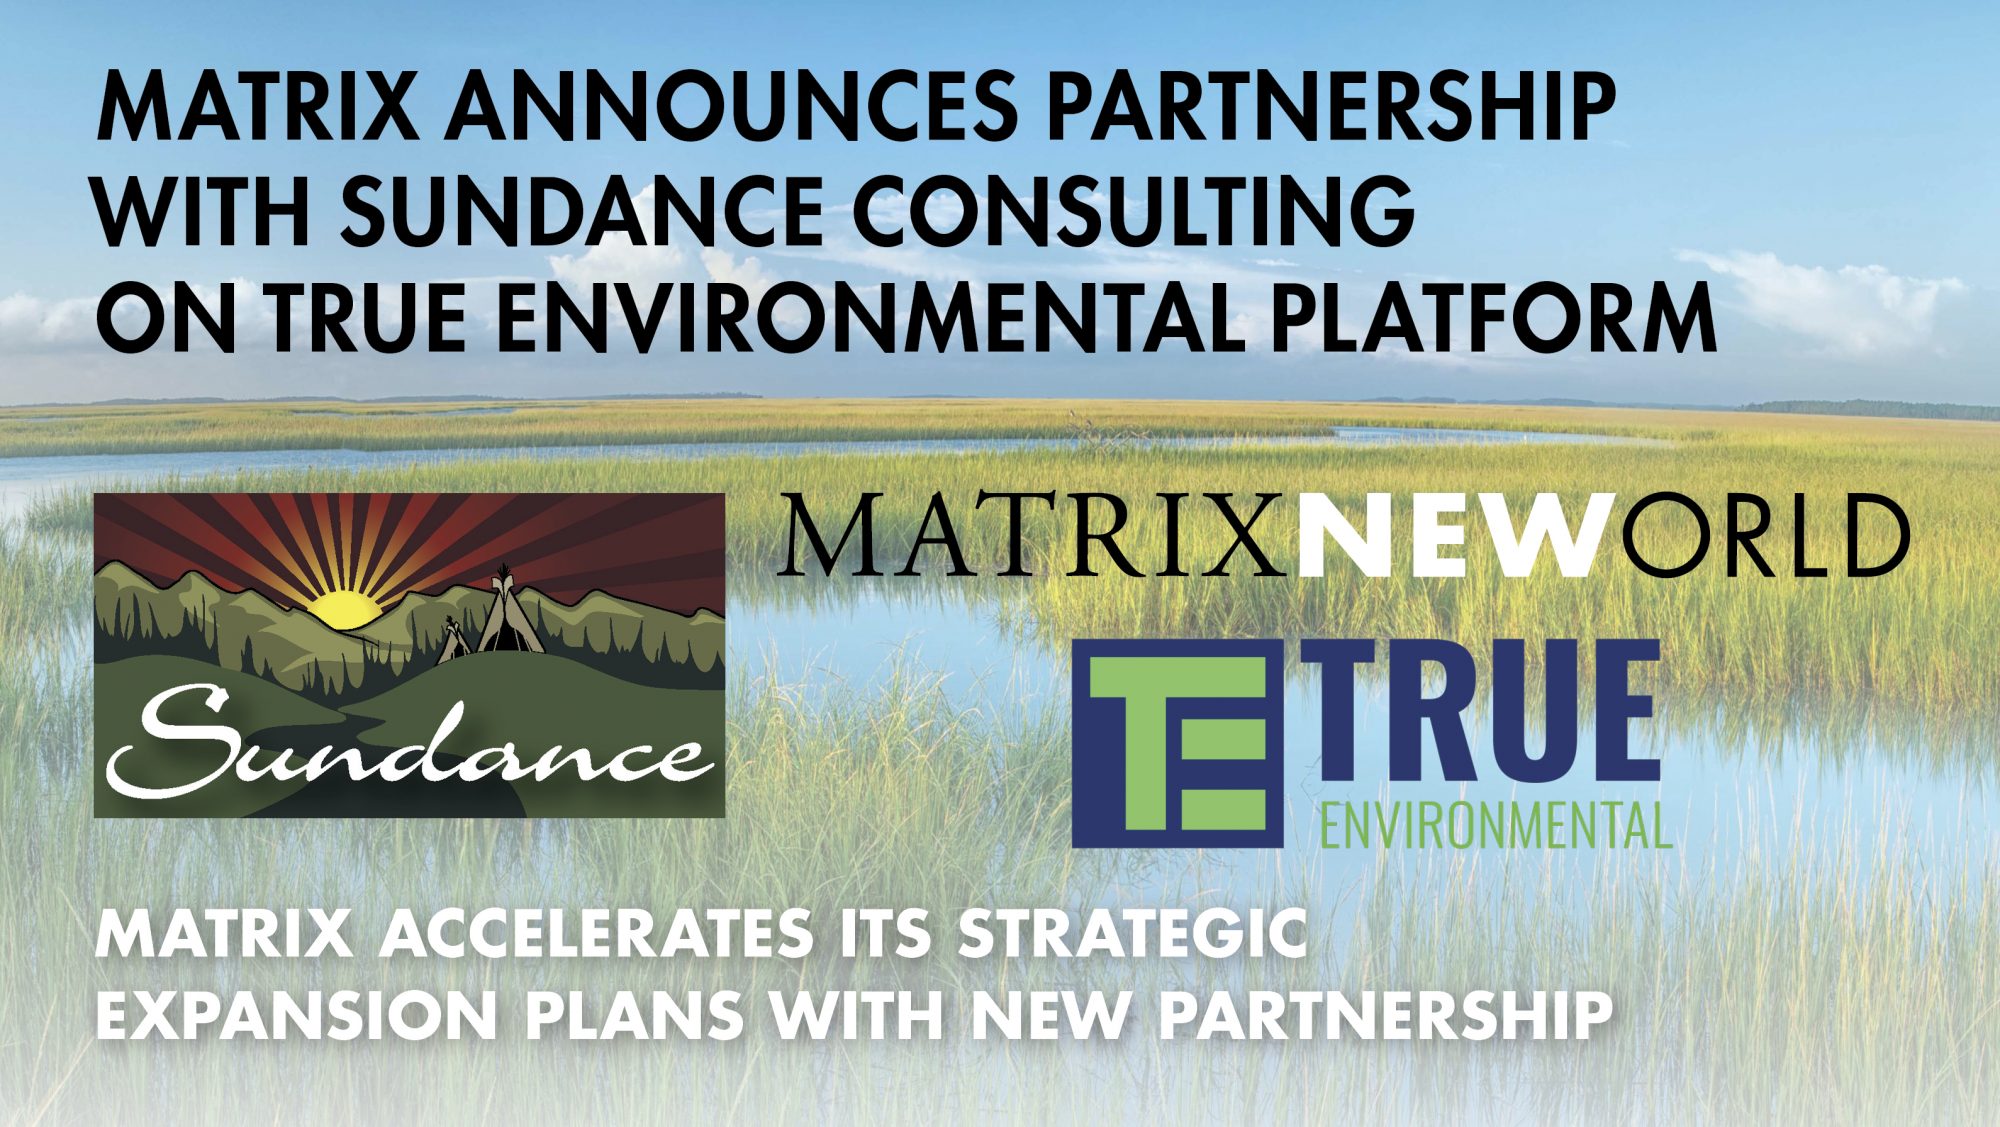 Sundance, Matrix, and True Environmental logos on marsh image with text